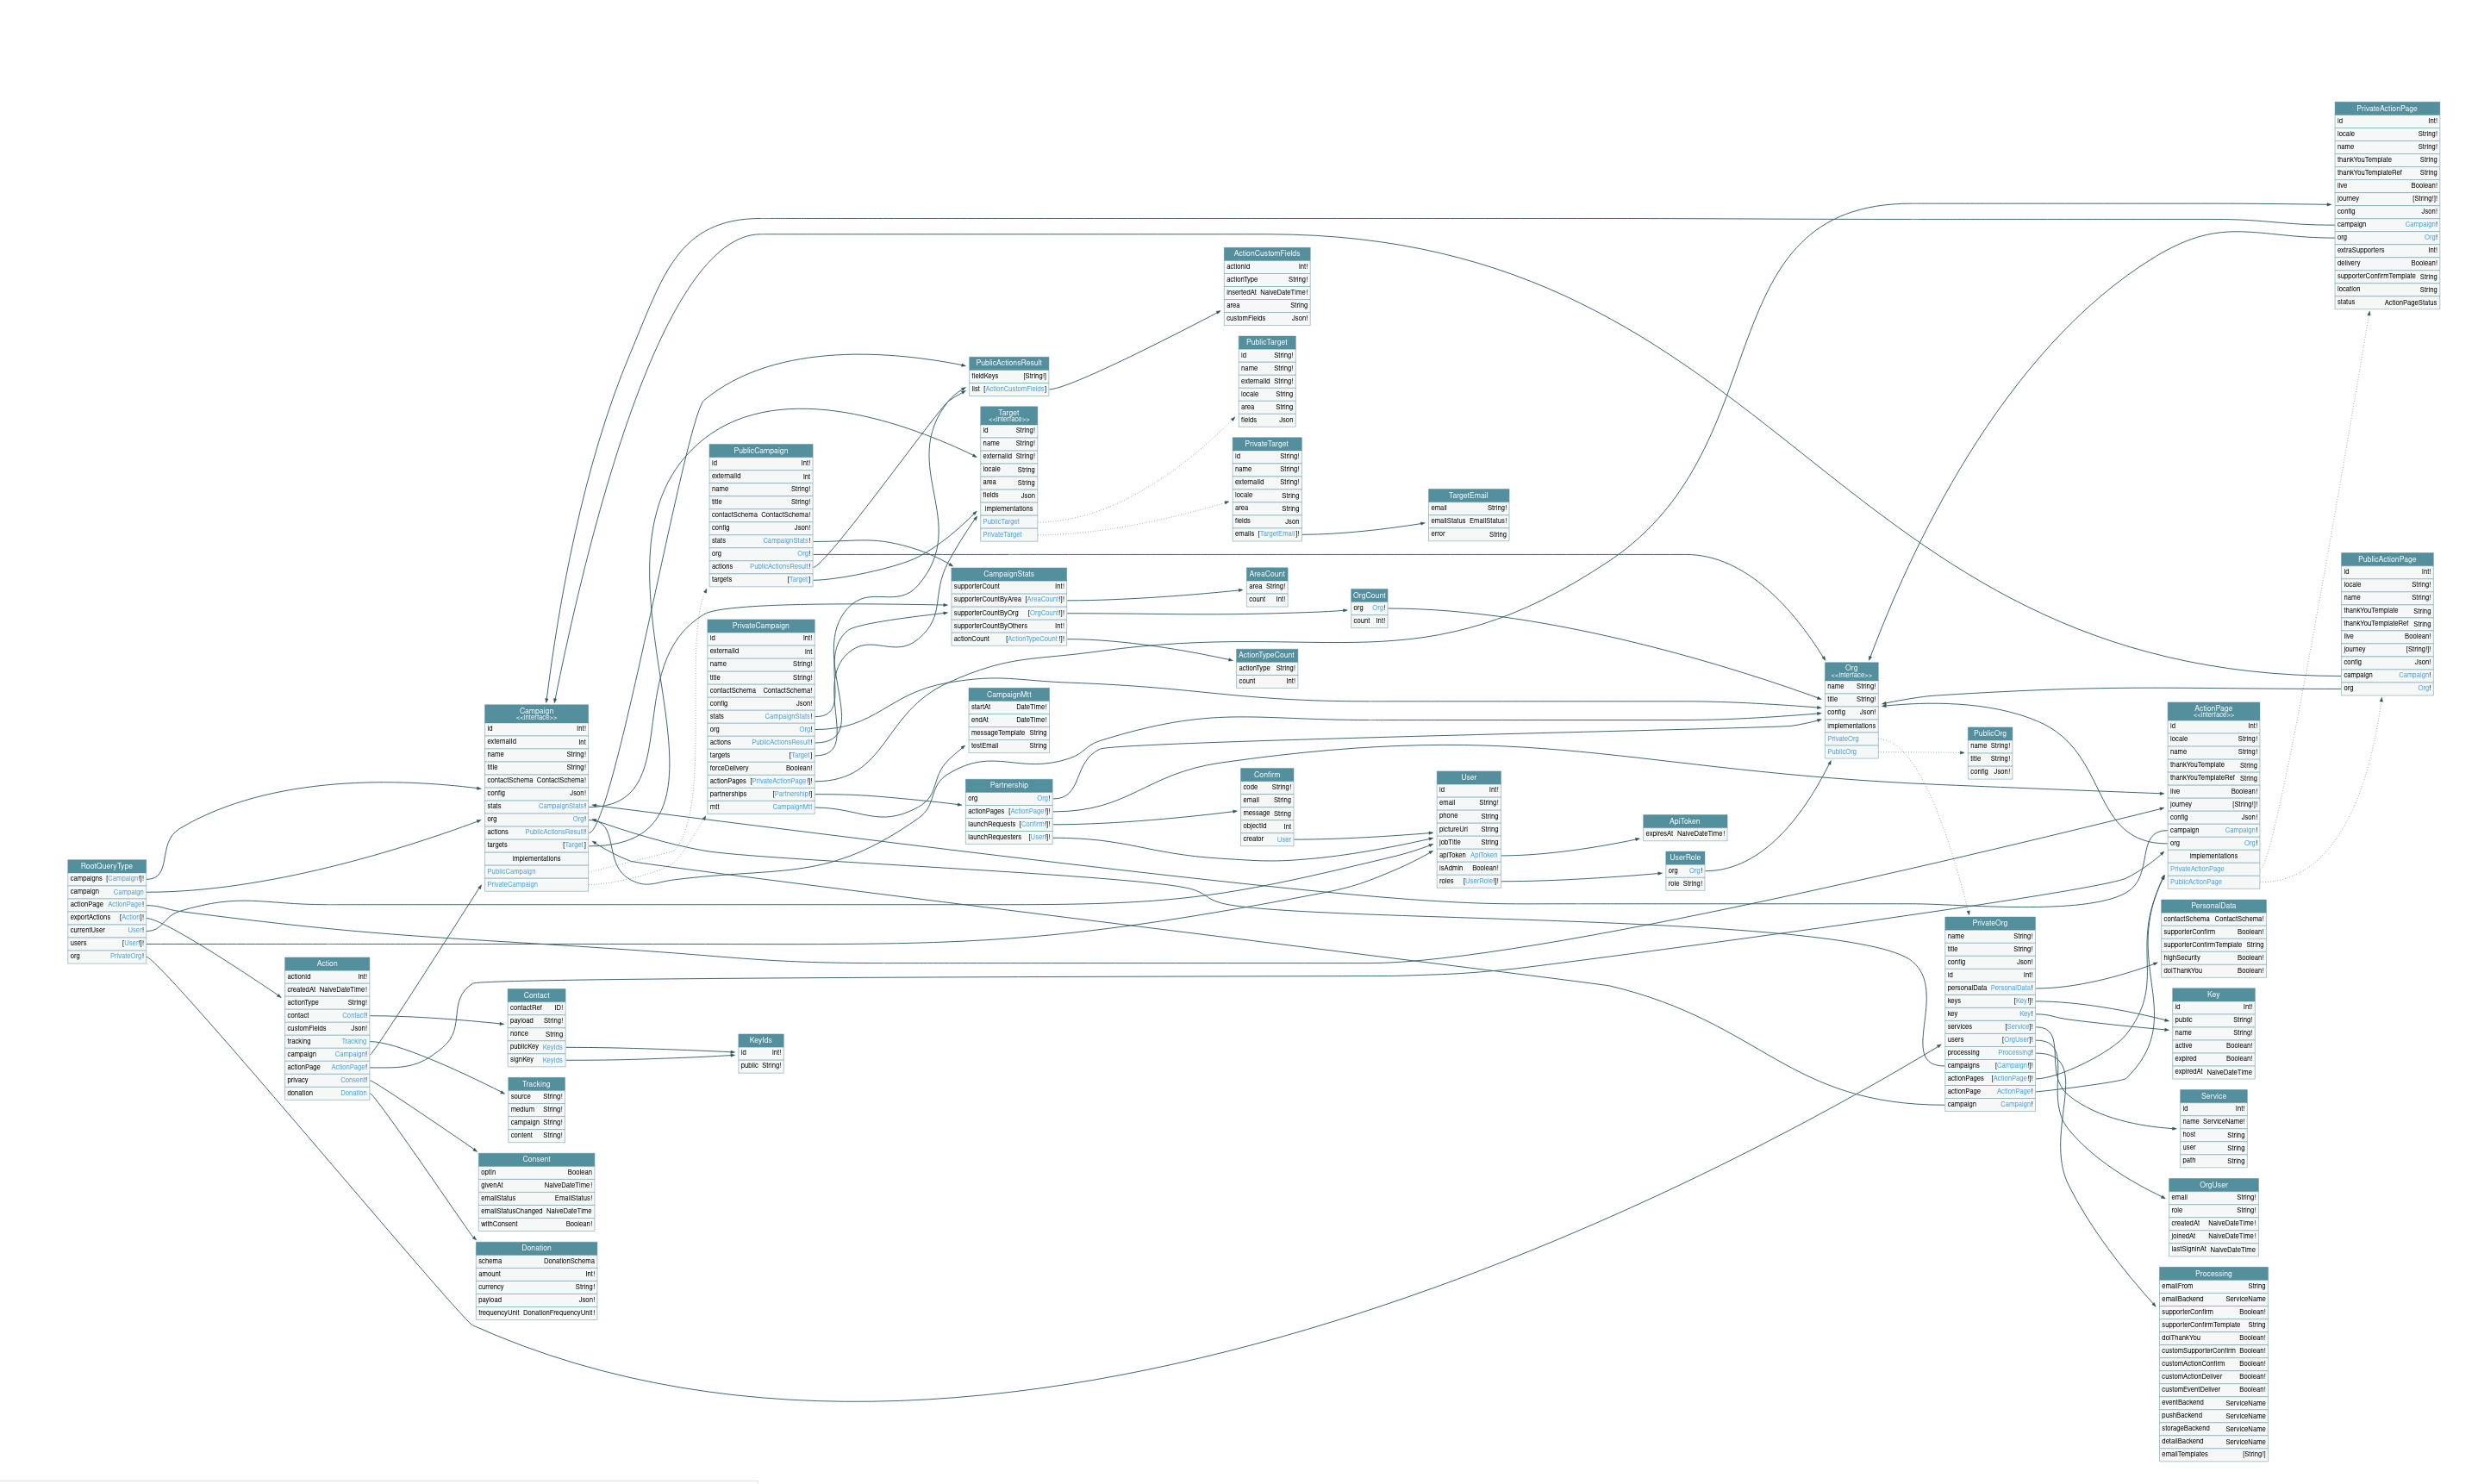 API schema visualized